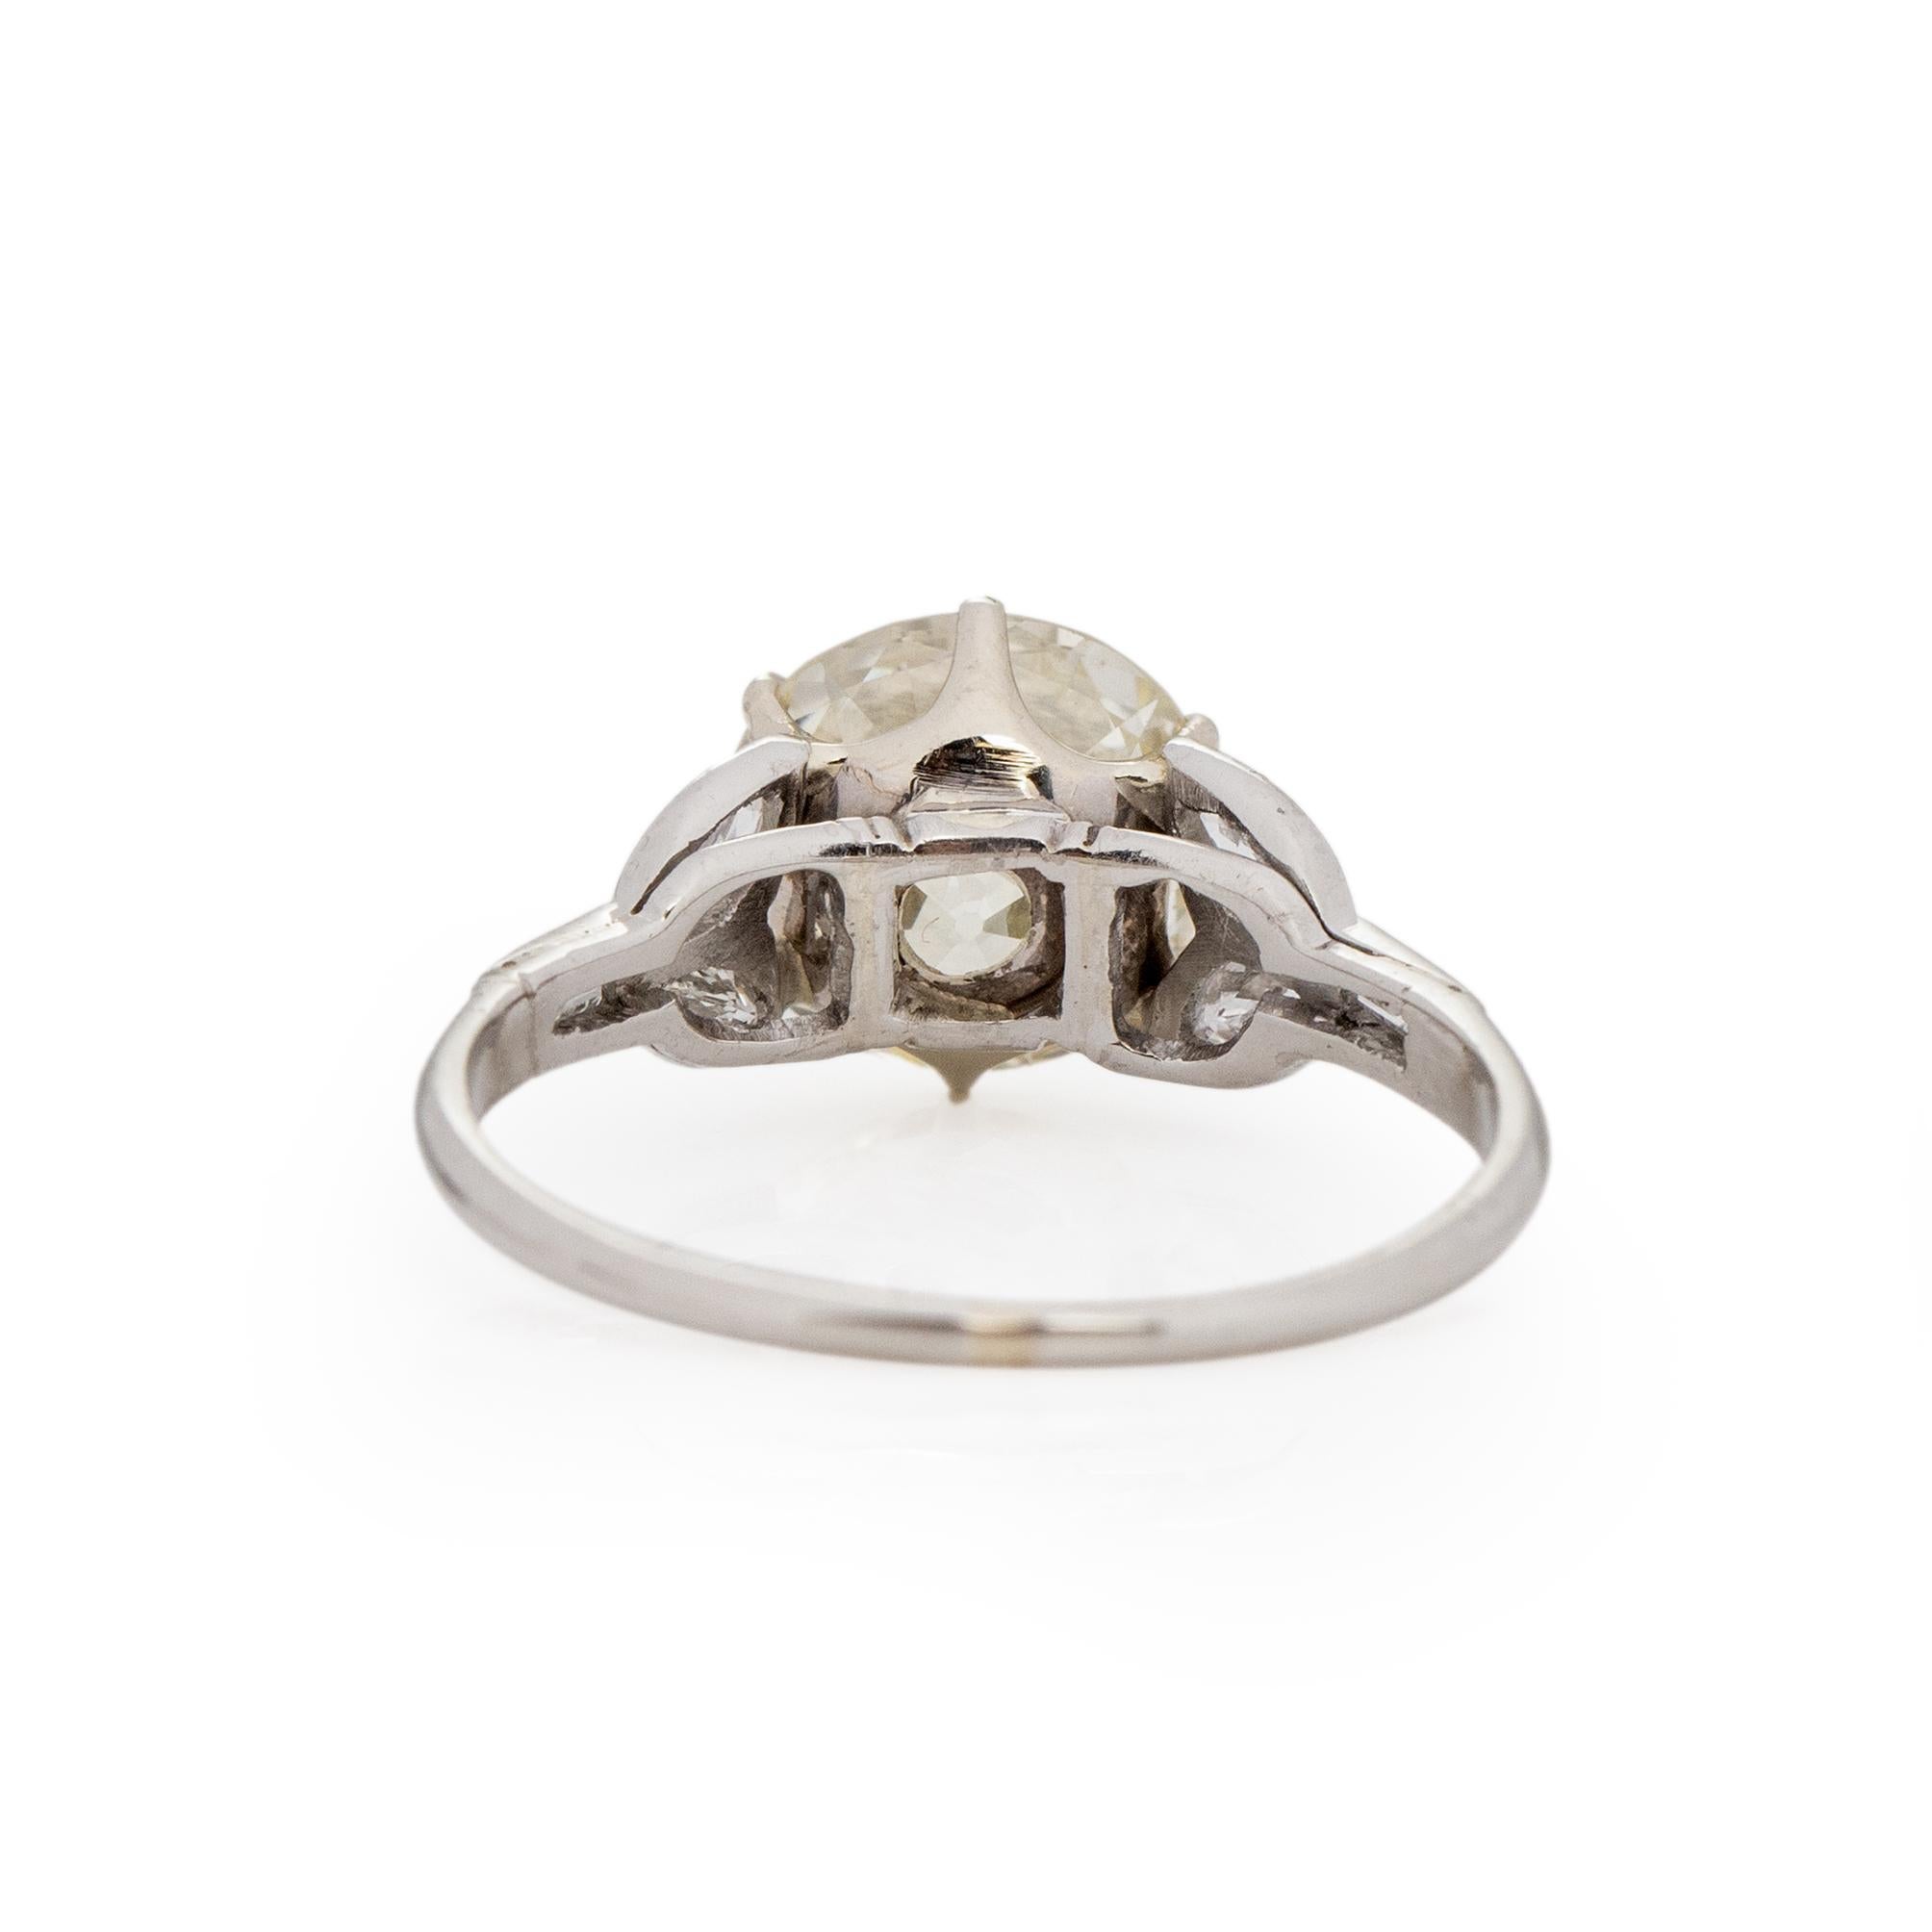 3 carat vintage diamond ring